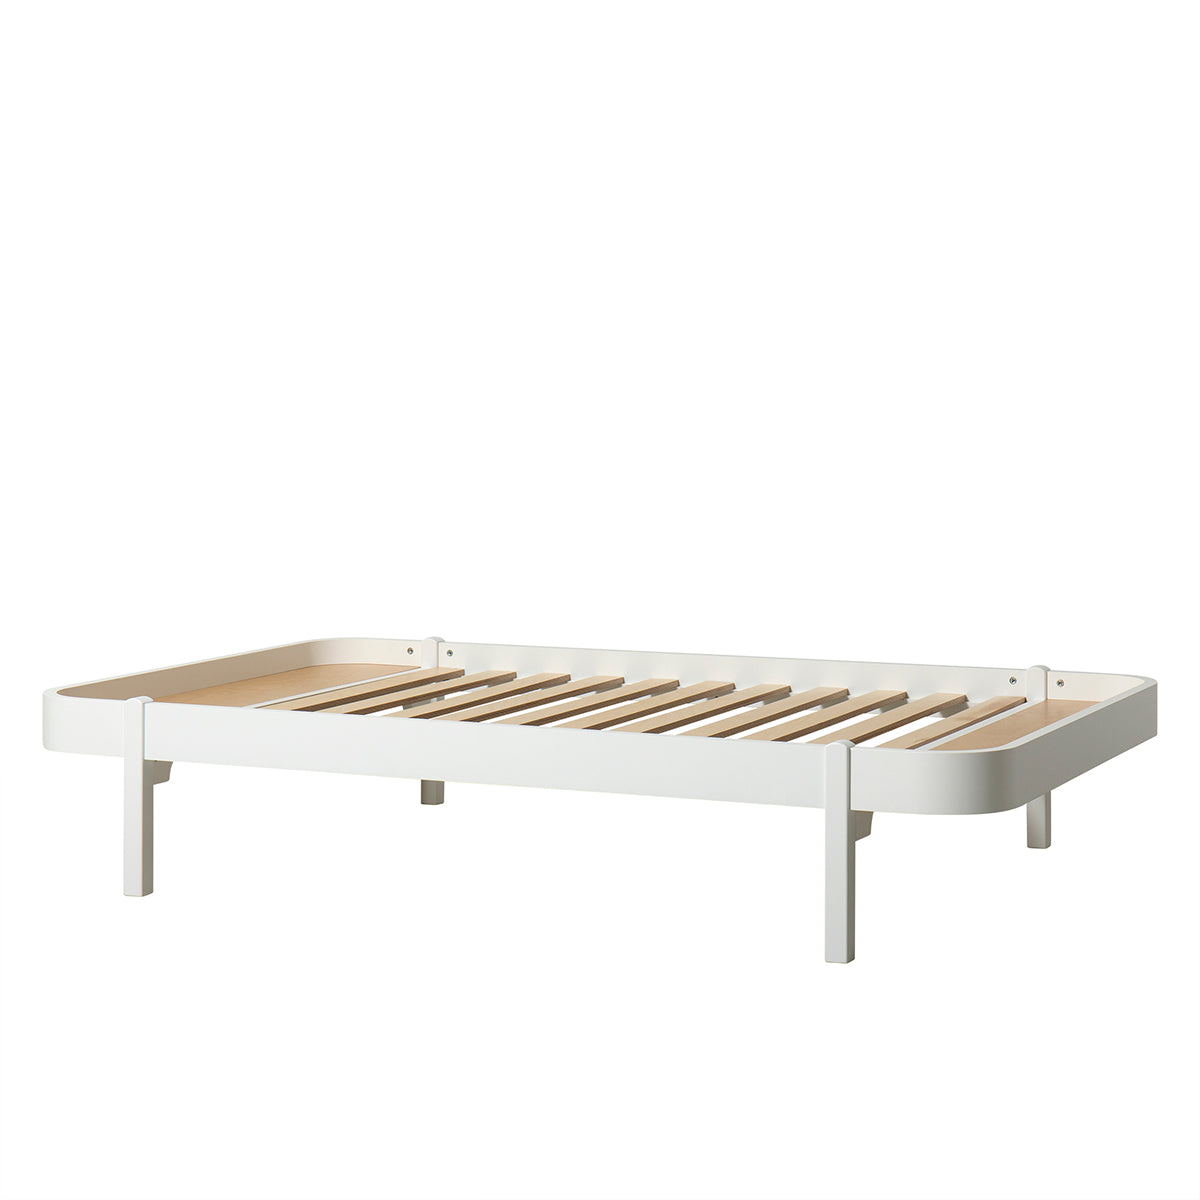 Oliver Furniture Wood Lounger, 120 x 200 cm, white